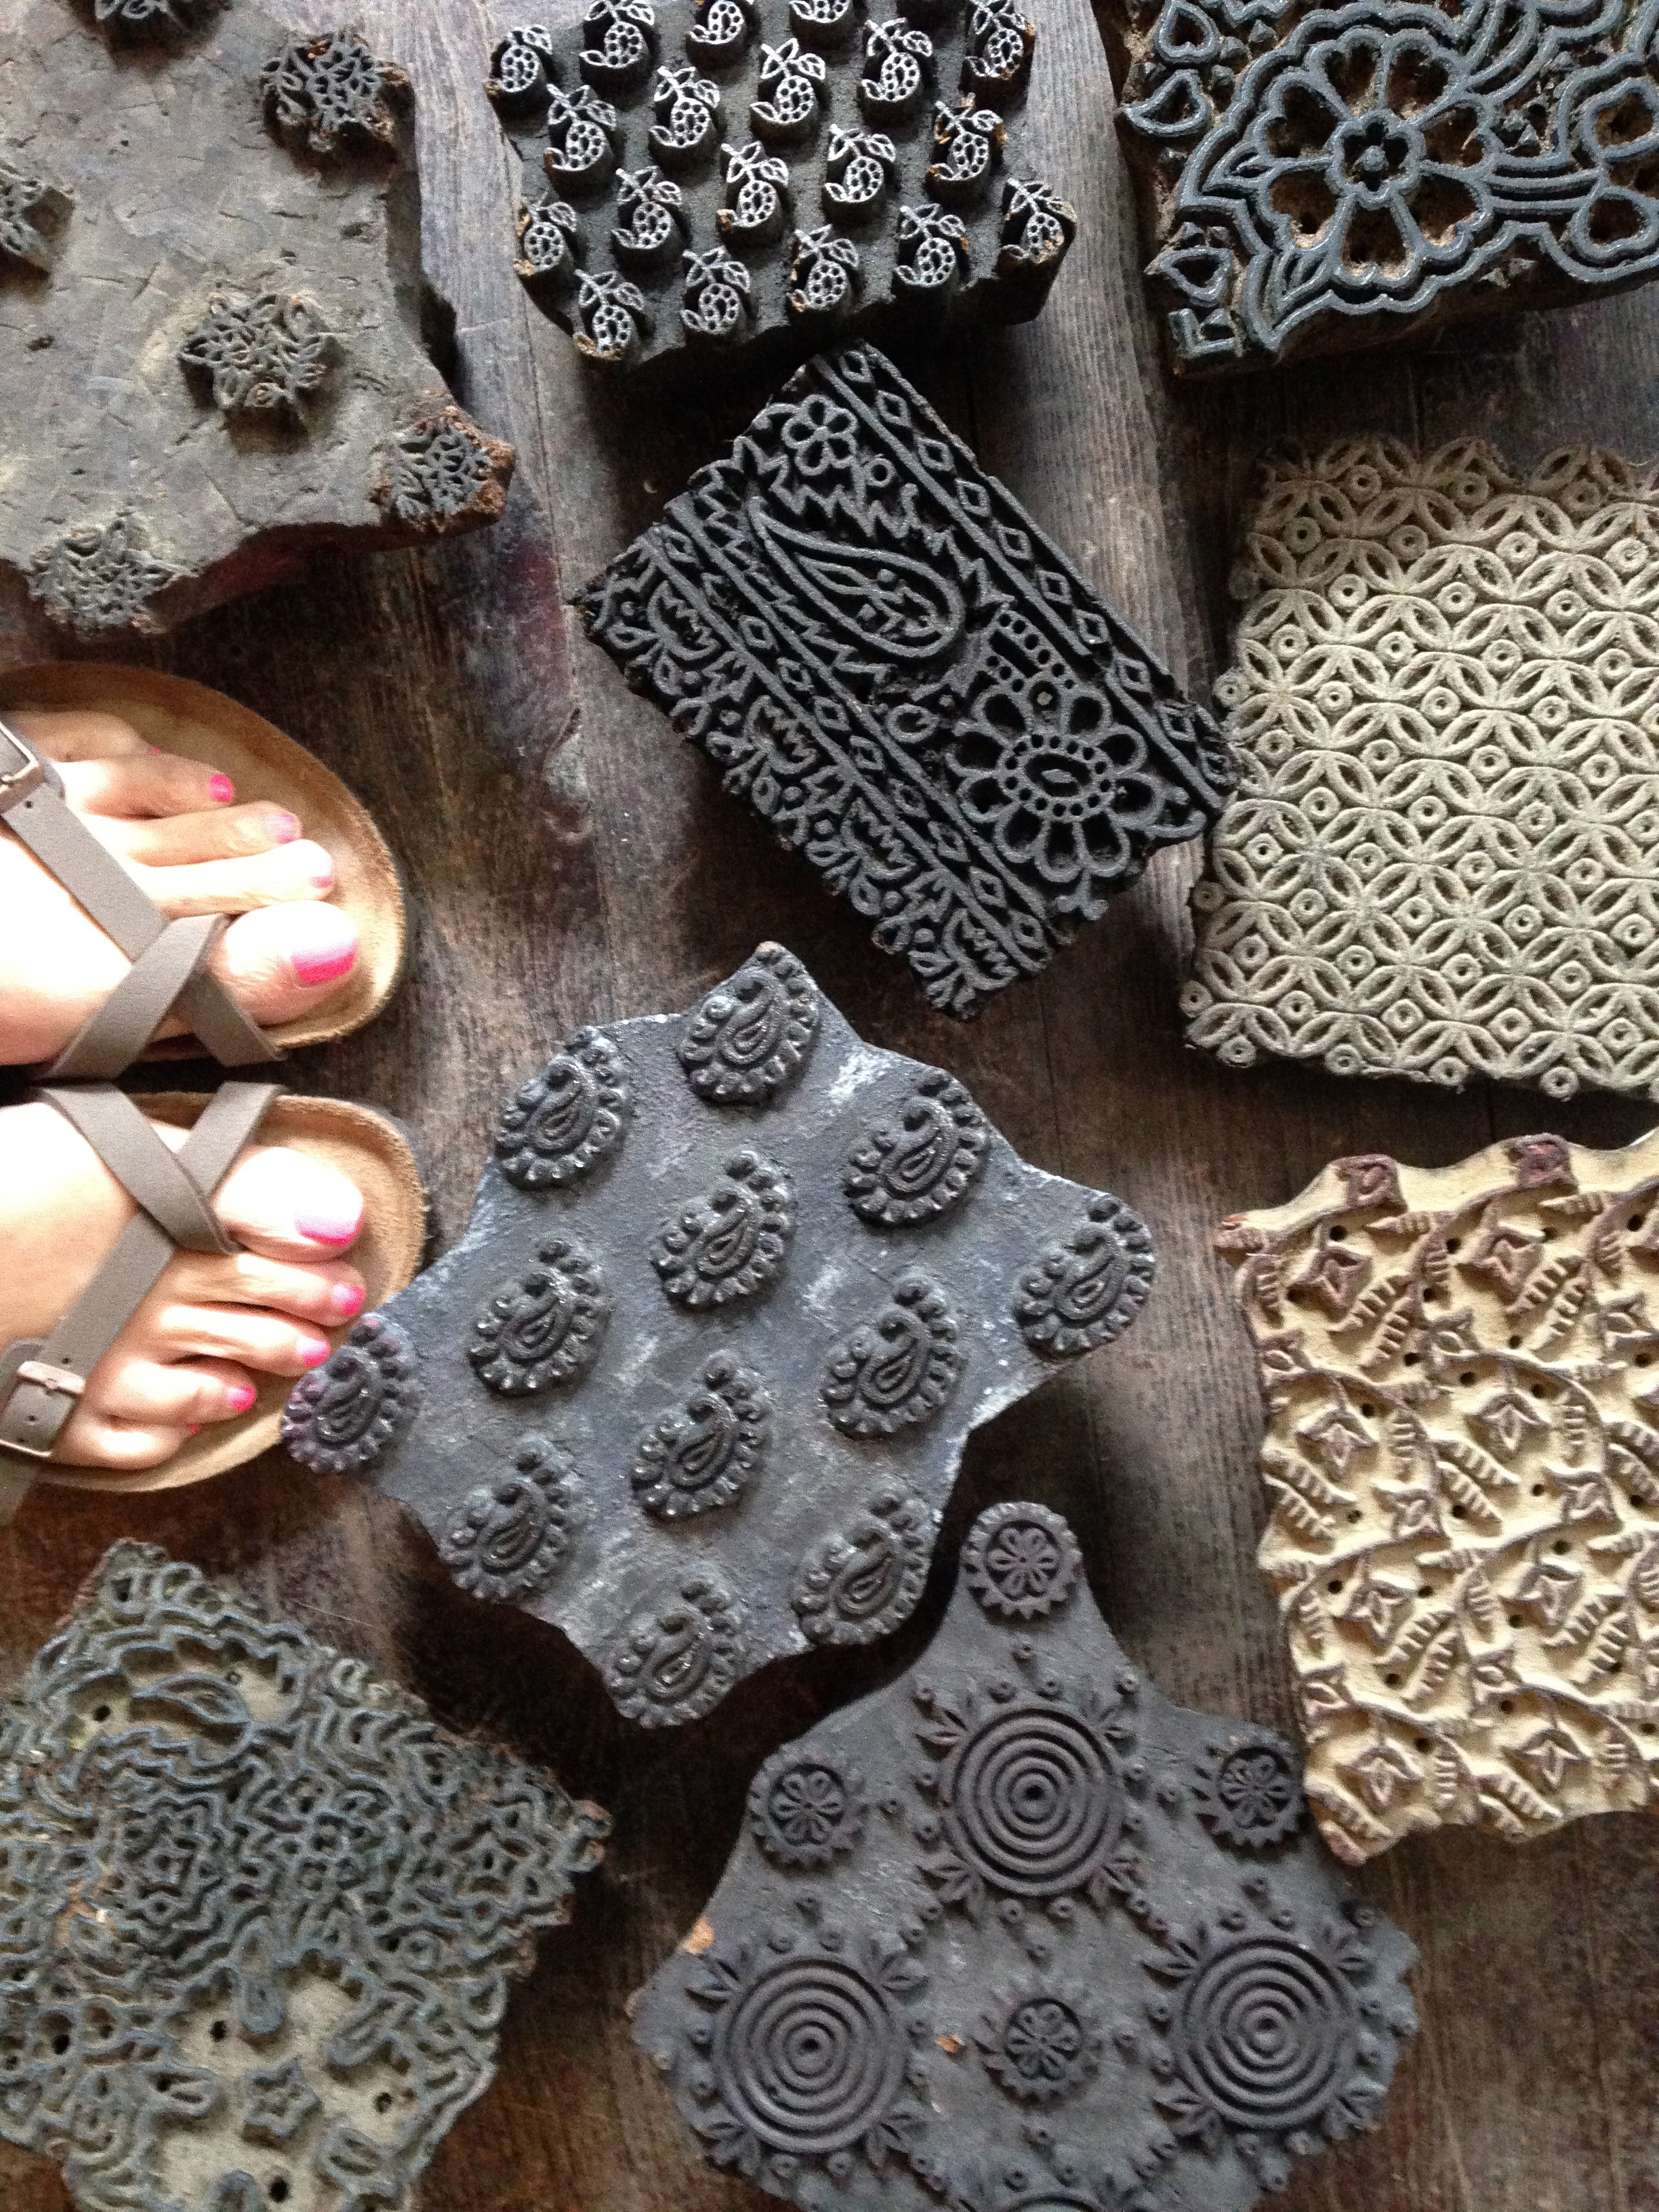 deVOL-kitchens-Helen Parker-origional-Indian-printing-blocks-Birkenstocks-shoes-floorboards-antiques-gifts-decorations-unusual-patterns-